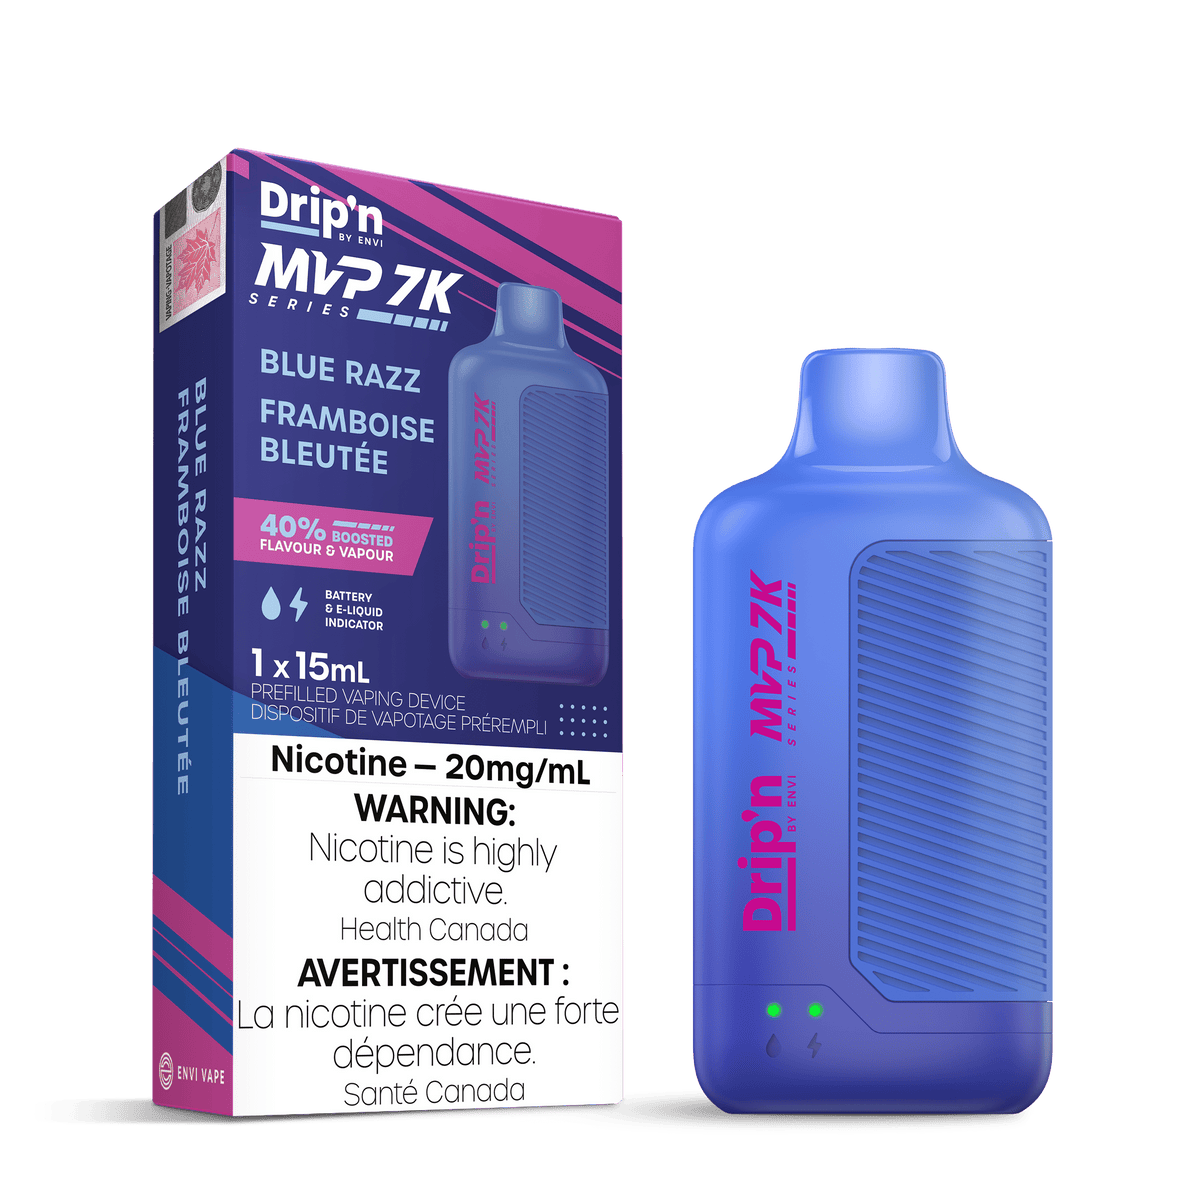 ENVI Drip'n MVP 7K - Blue Razz Disposable Vape available on Canada online vape shop